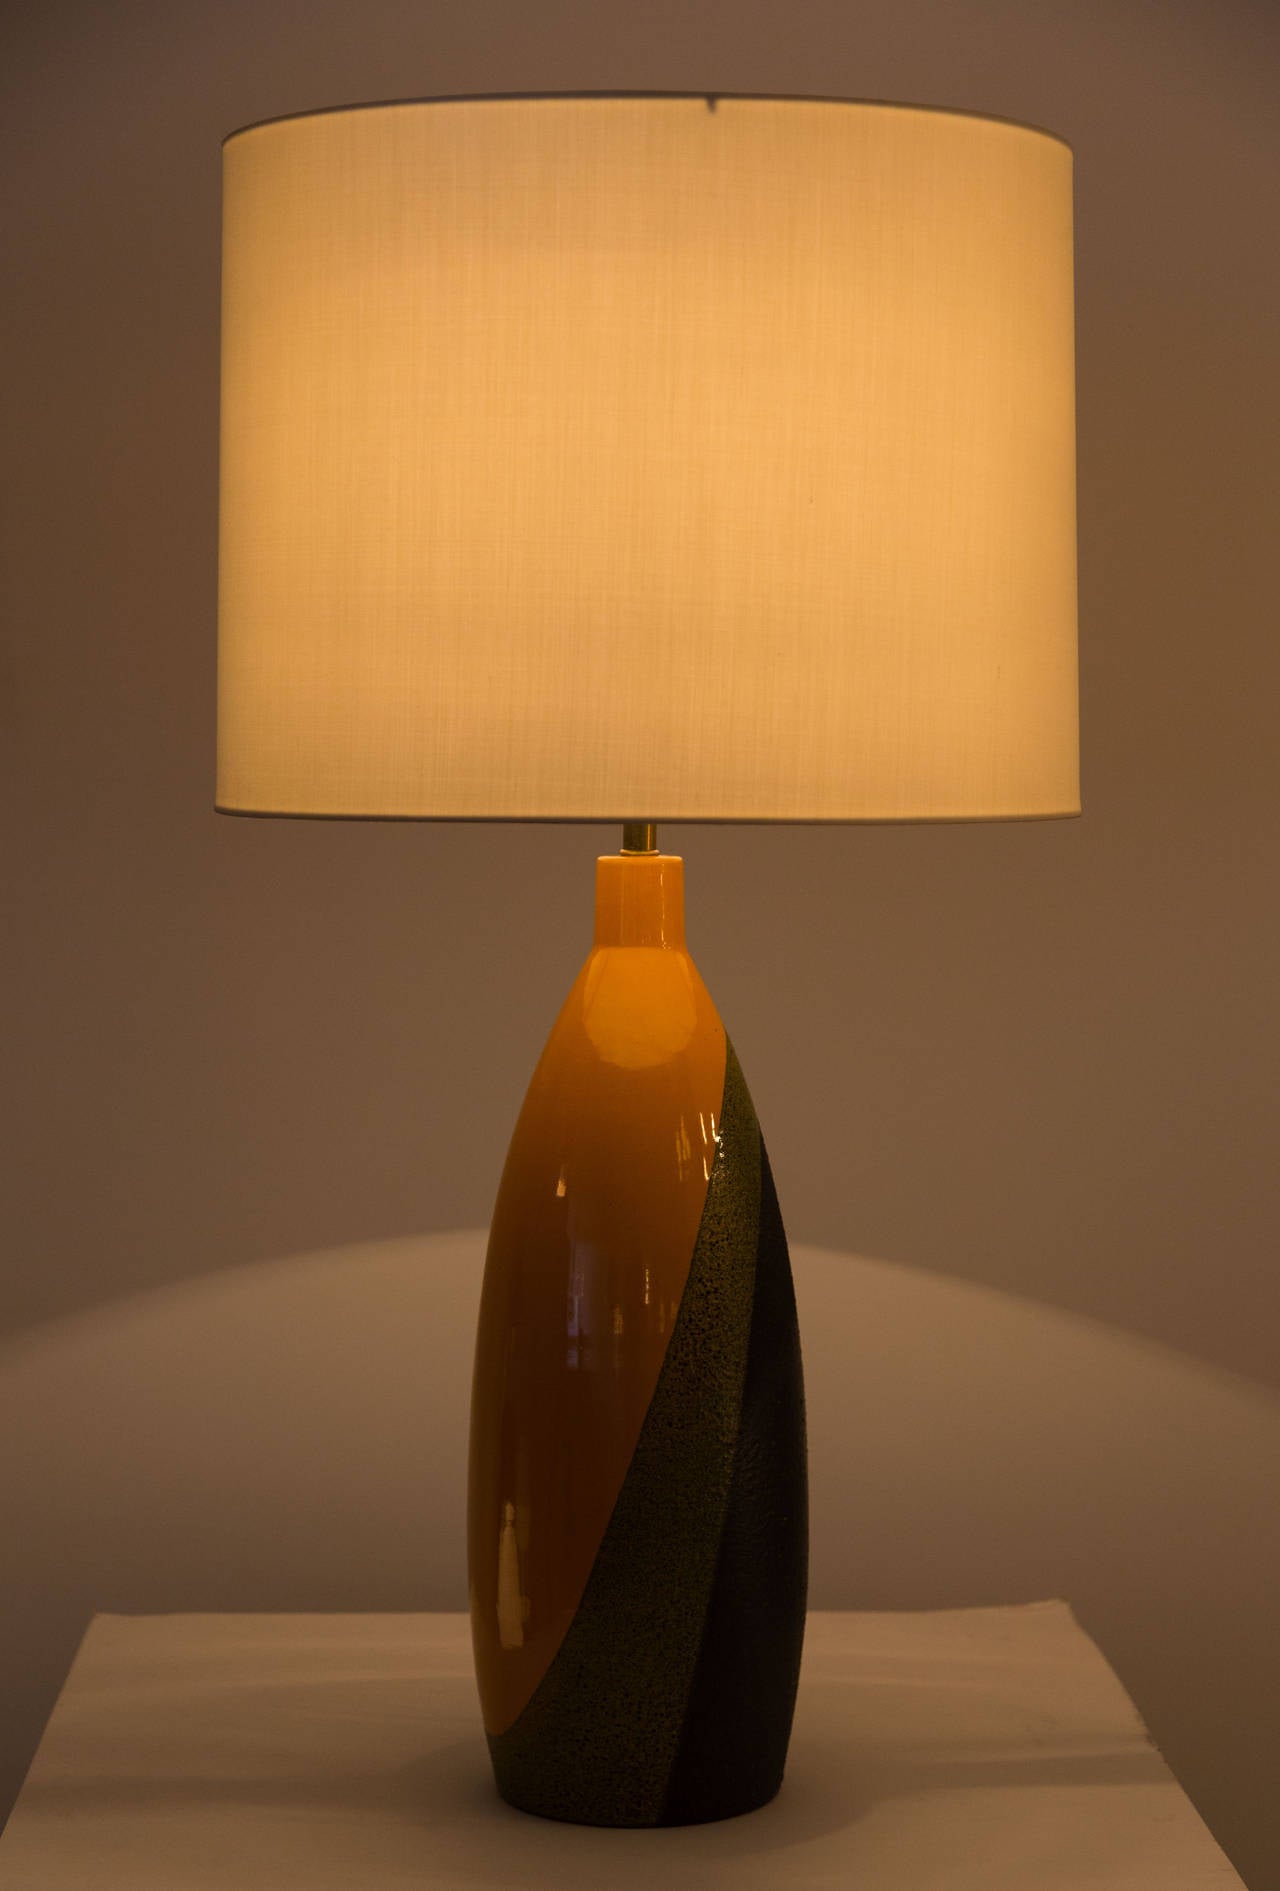 Ettore Sottsass glazed ceramic lamp.